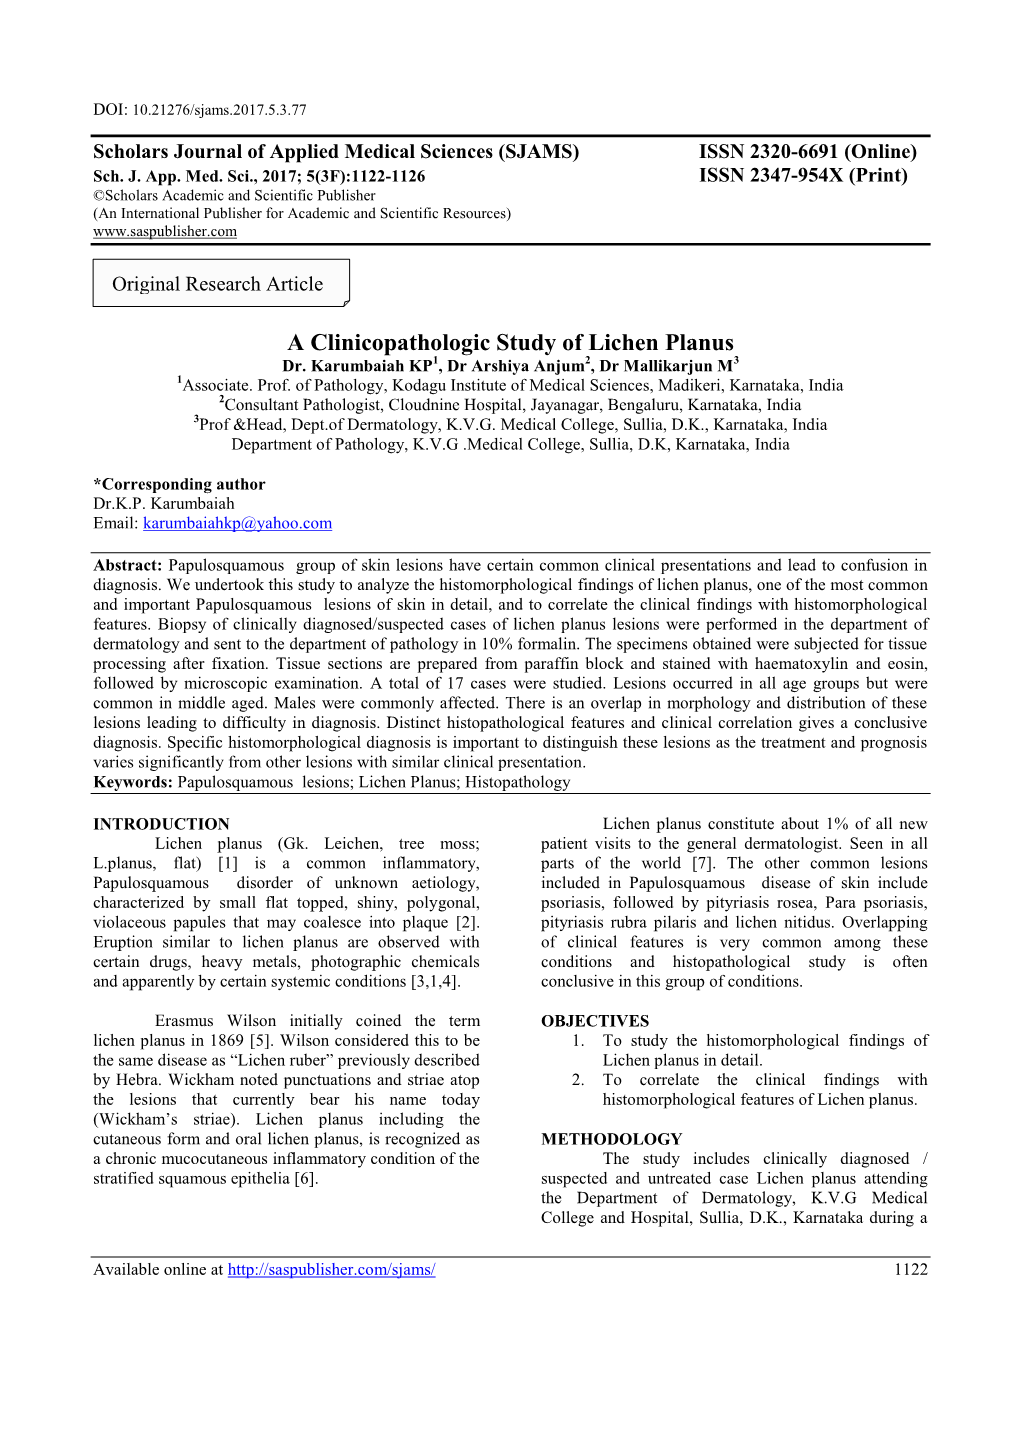 A Clinicopathologic Study of Lichen Planus Dr